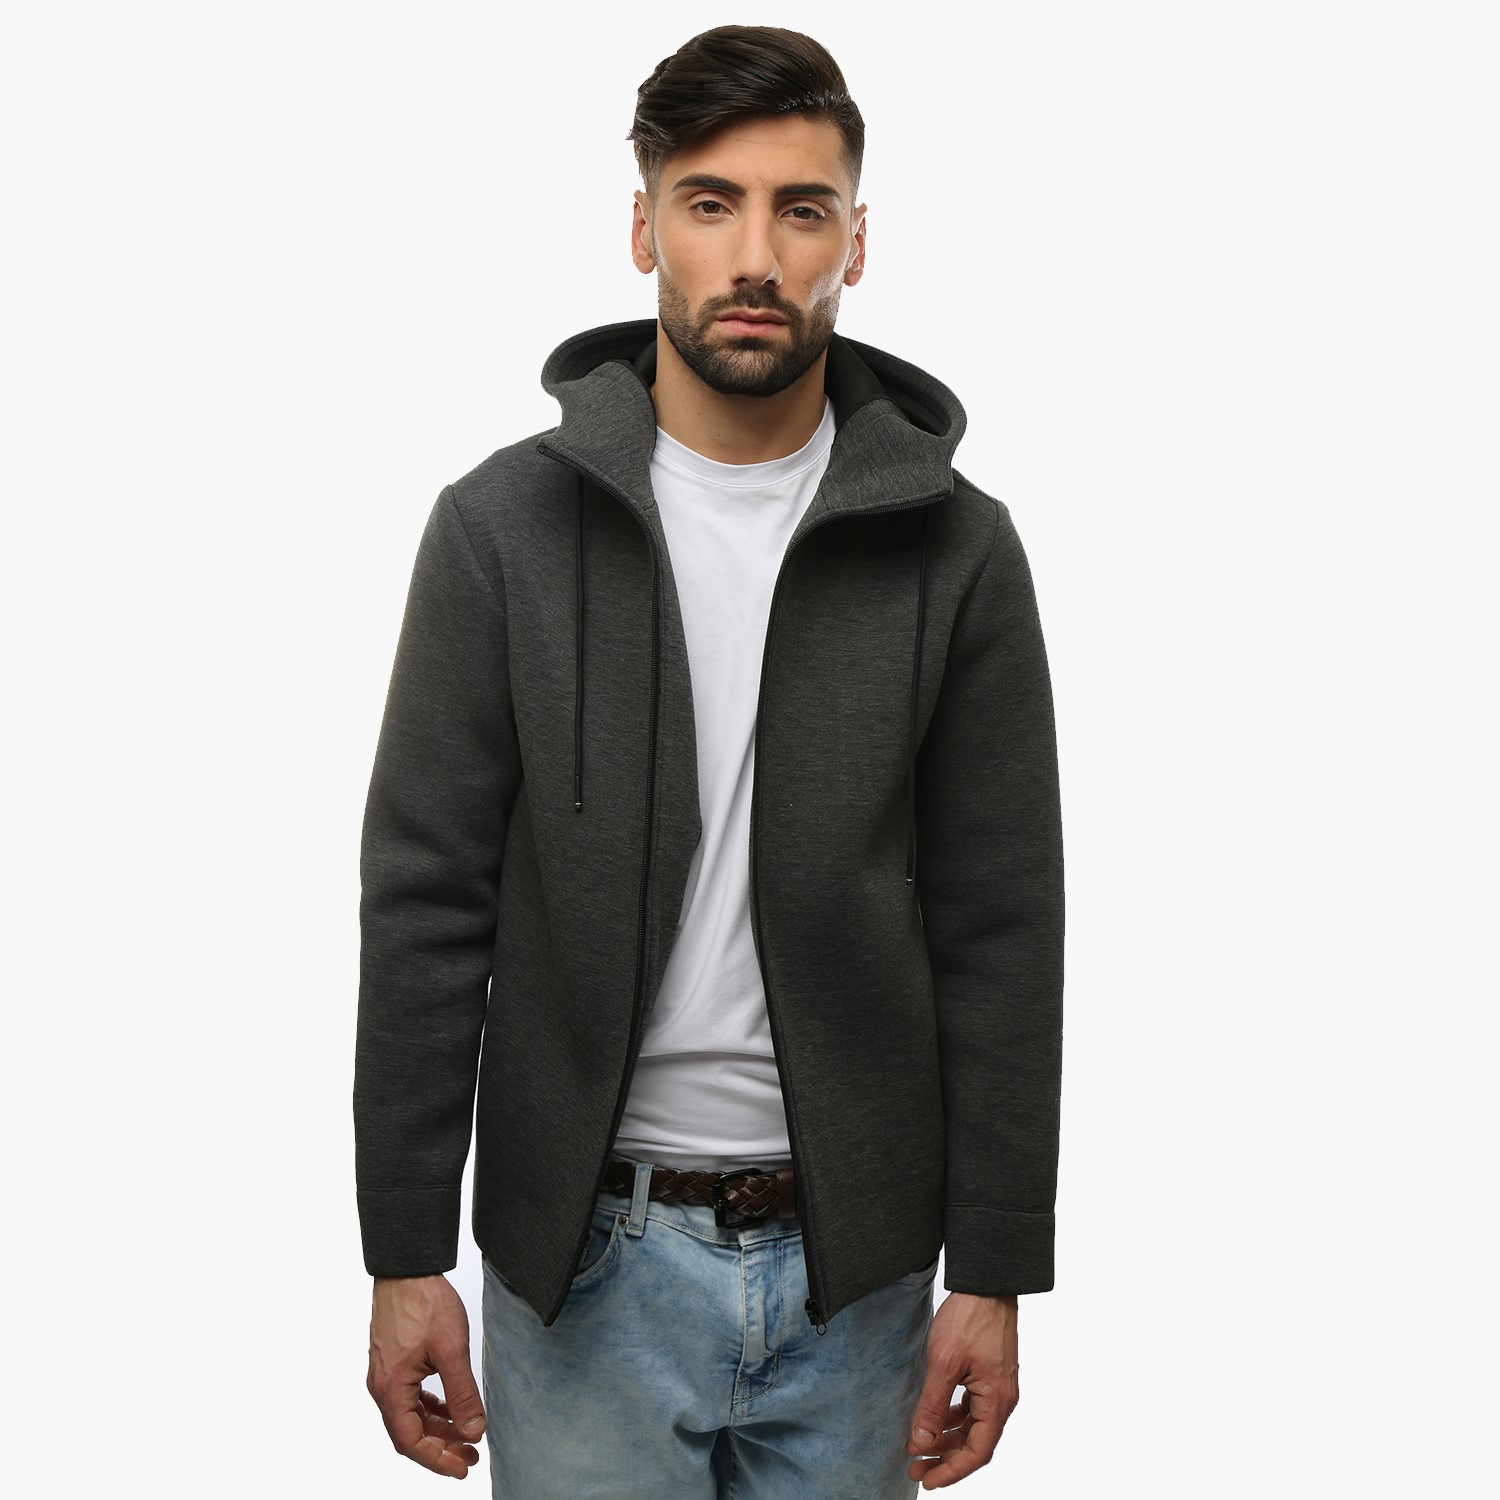 Scuba hoodie sweatshirt | Sweatshirts | Clothing Man | Vertical